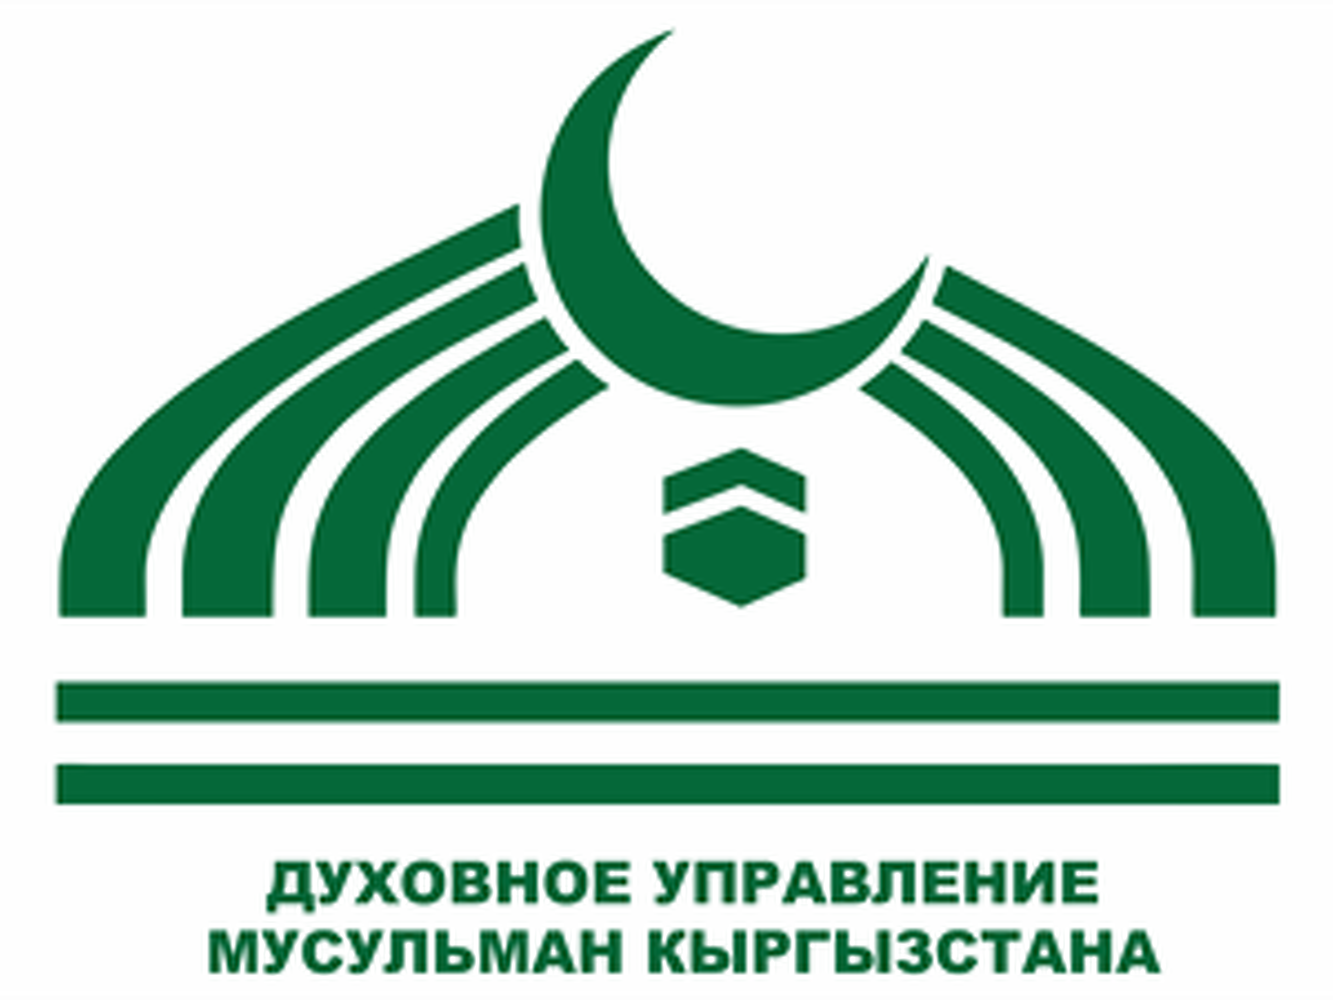 Муфтий призвал мусульман Кыргызстана строго придерживаться требований карантина — Today.kg